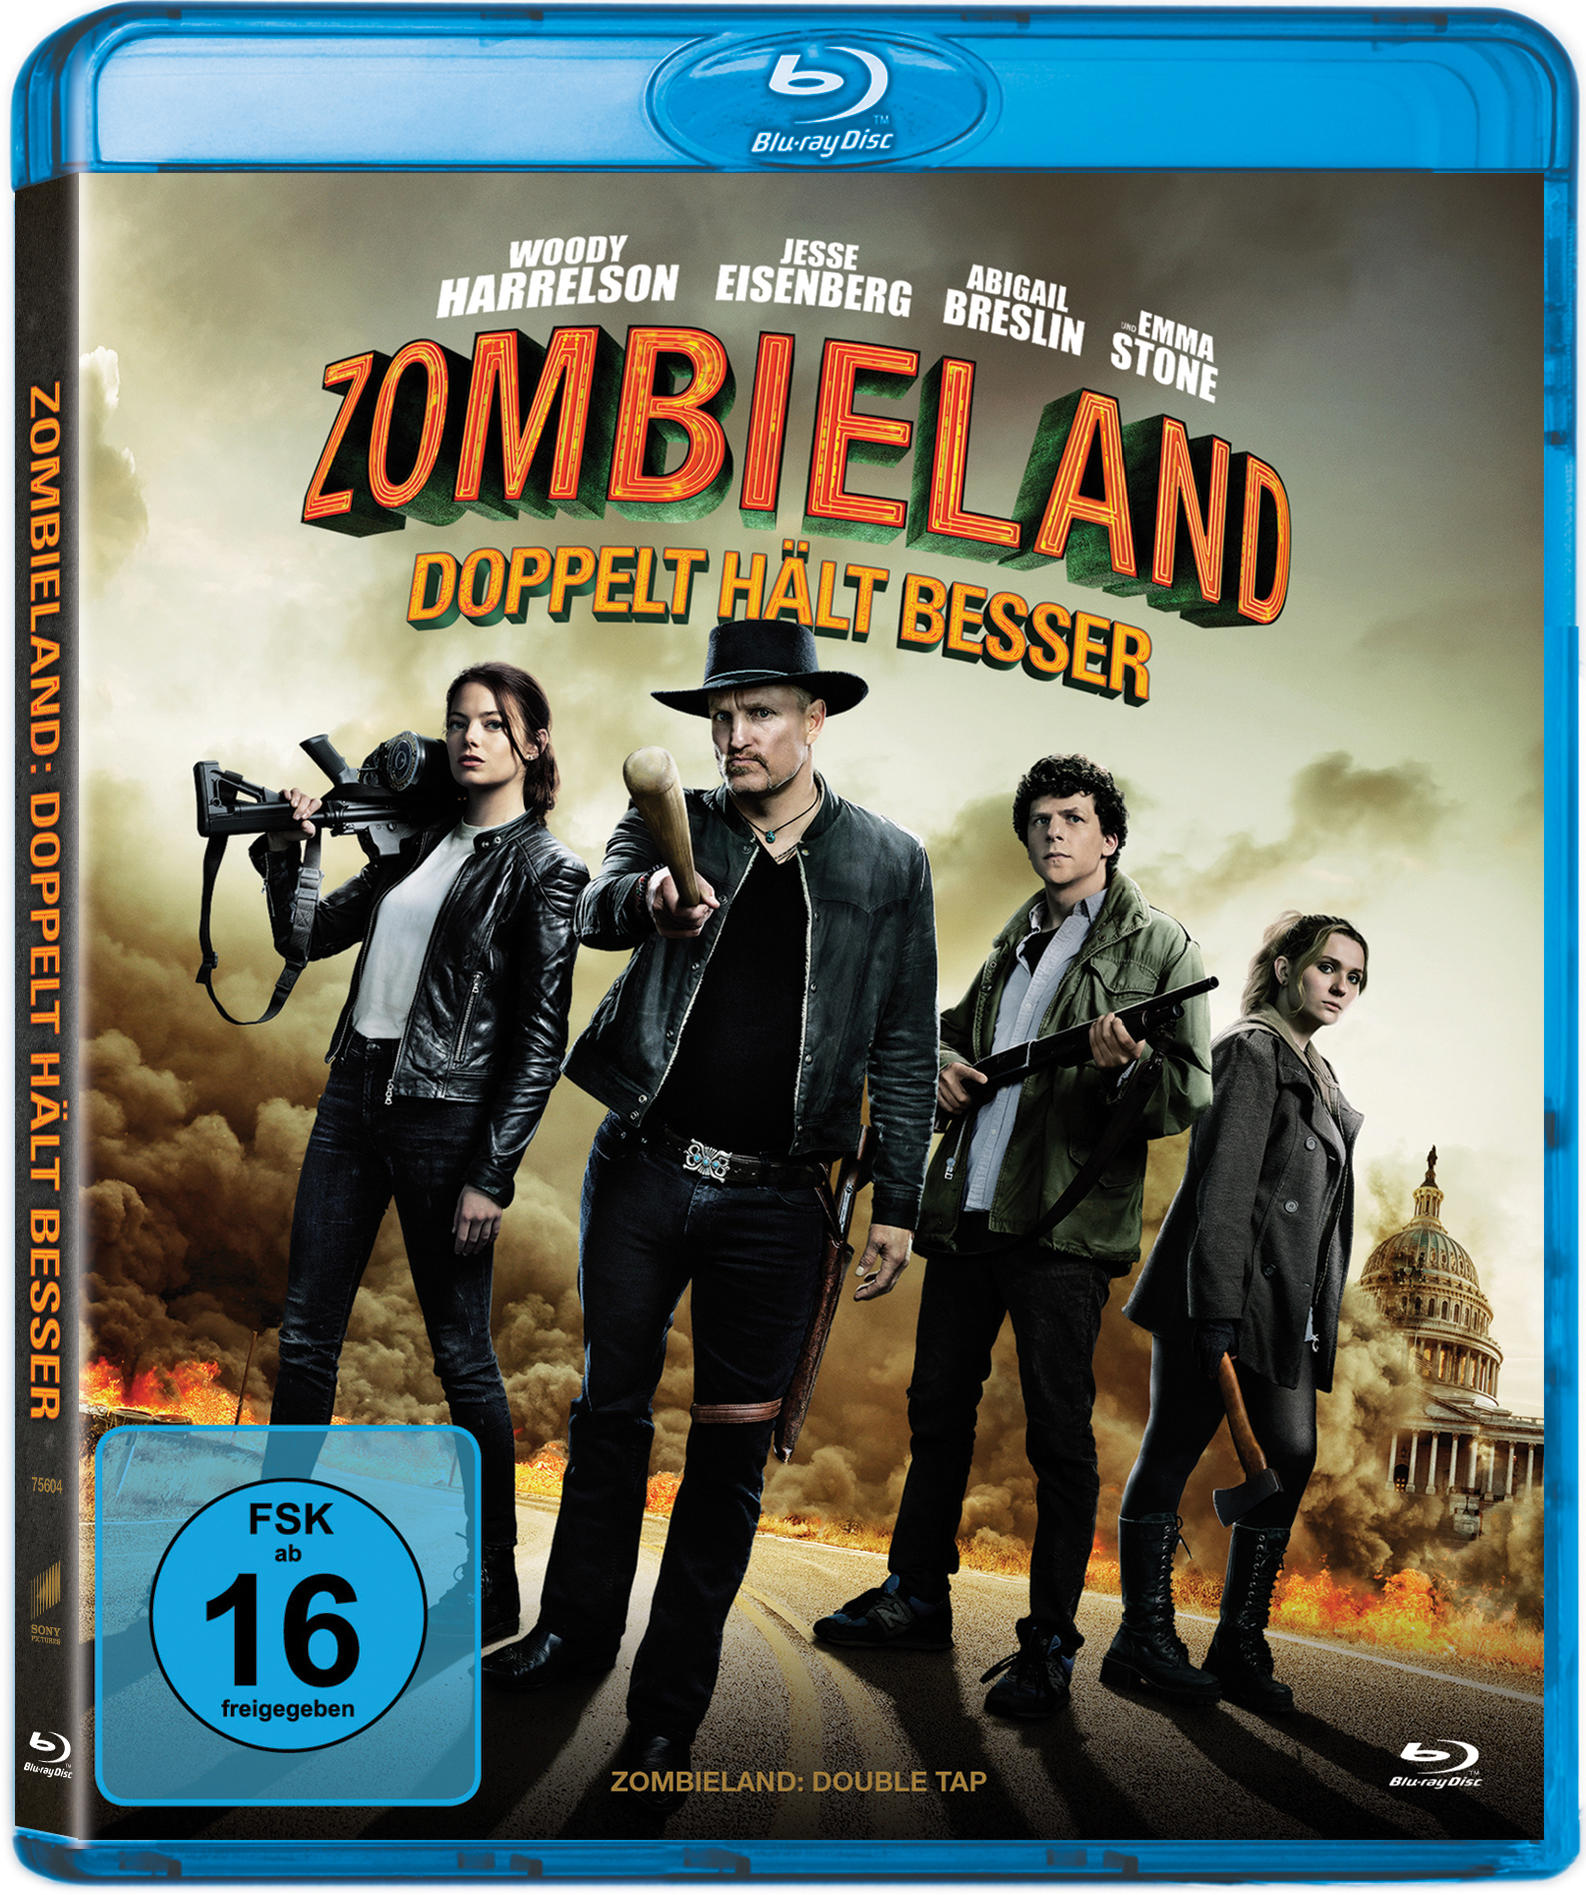 Doppelt hält Zombieland: besser Blu-ray